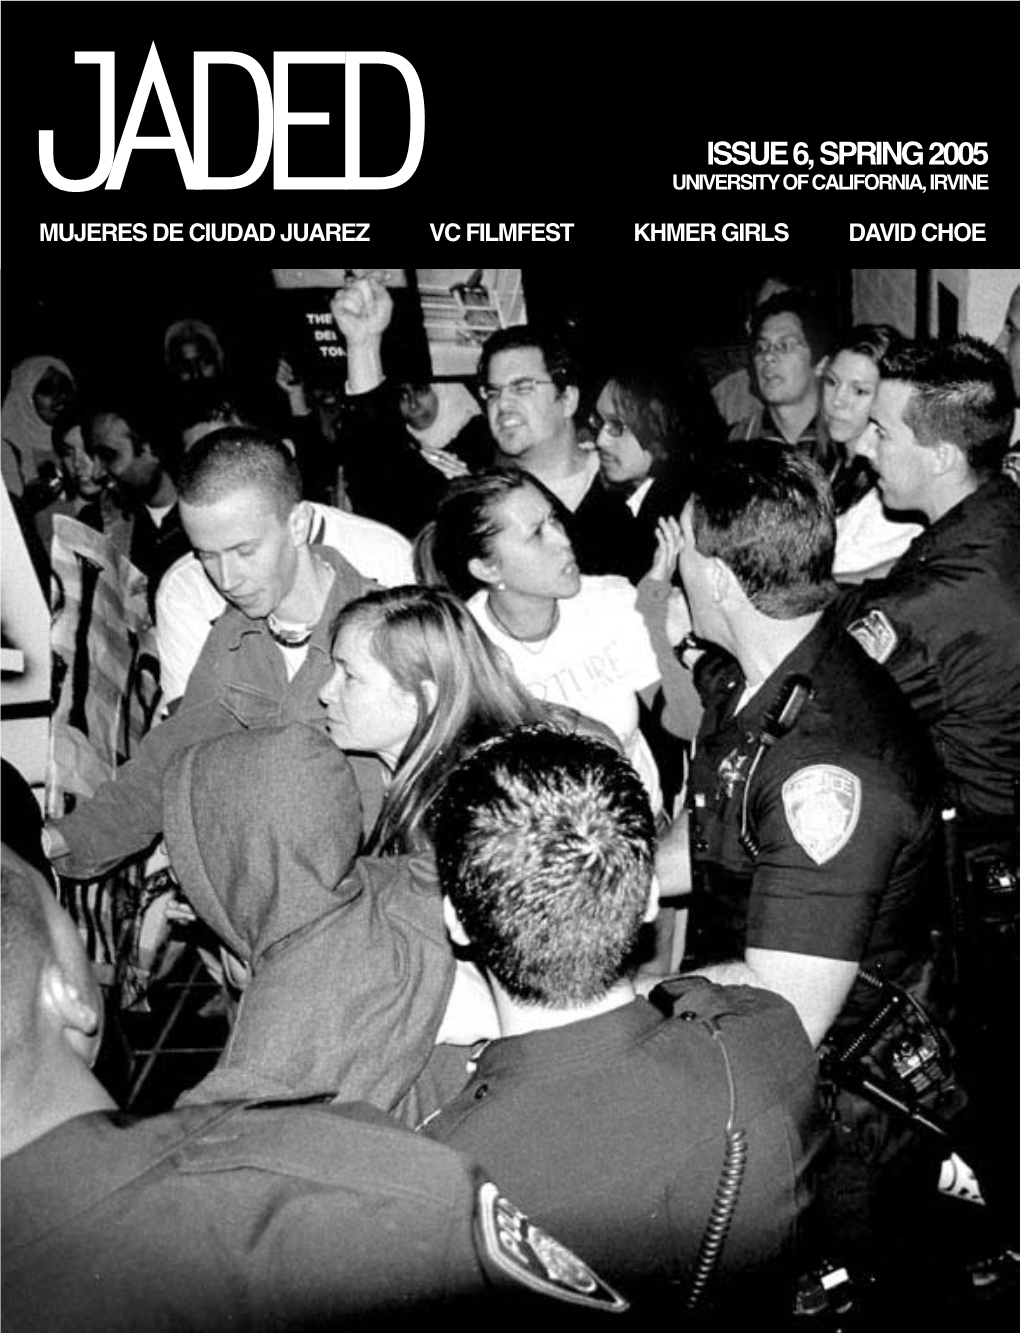 Issue 6, Spring 2005 Jaded University of California, Irvine Mujeres De Ciudad Juarez Vc Filmfest Khmer Girls David Choe